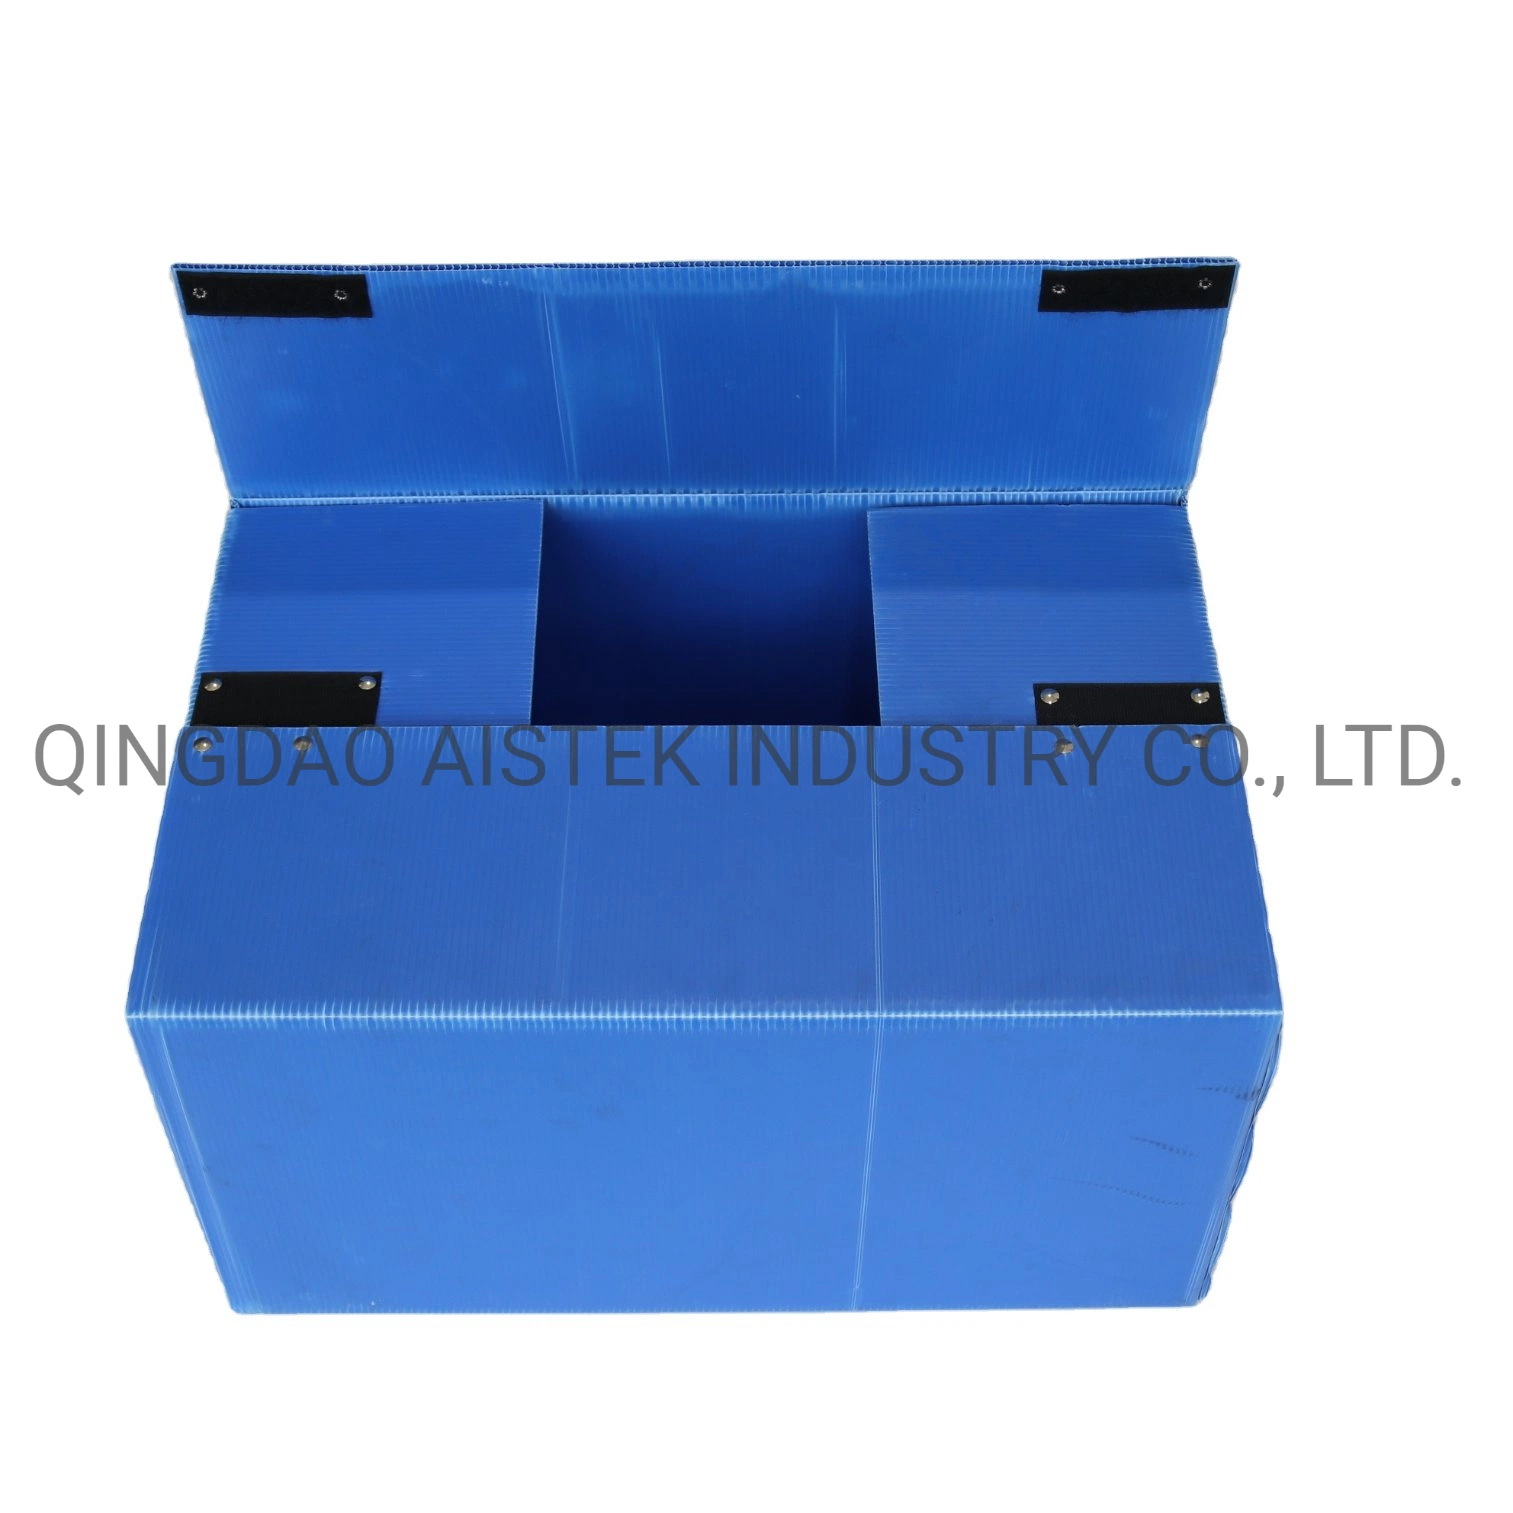 Reusable Polypropylene Corrugated Plastic Carton Box for Packing